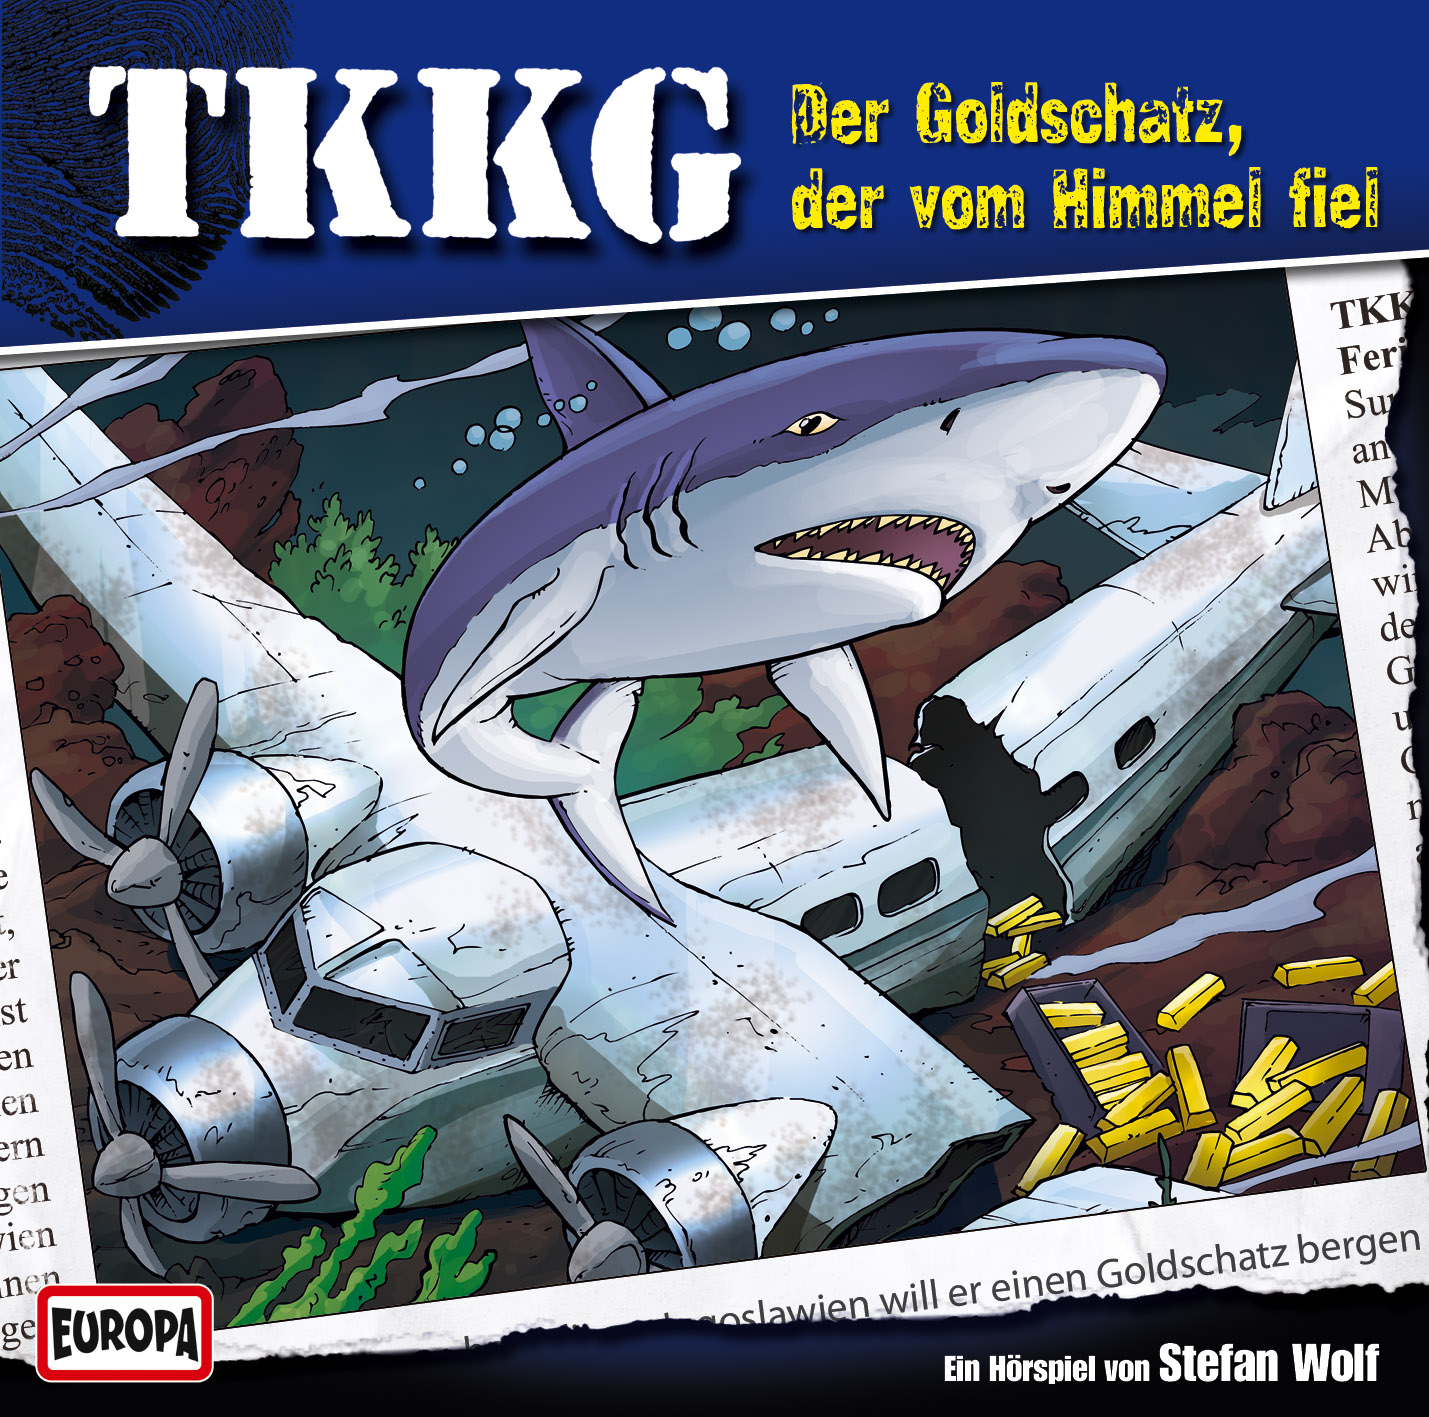 TKKG Hörspiel-Folge 122: Der Goldschatz, der vom Himmel fiel